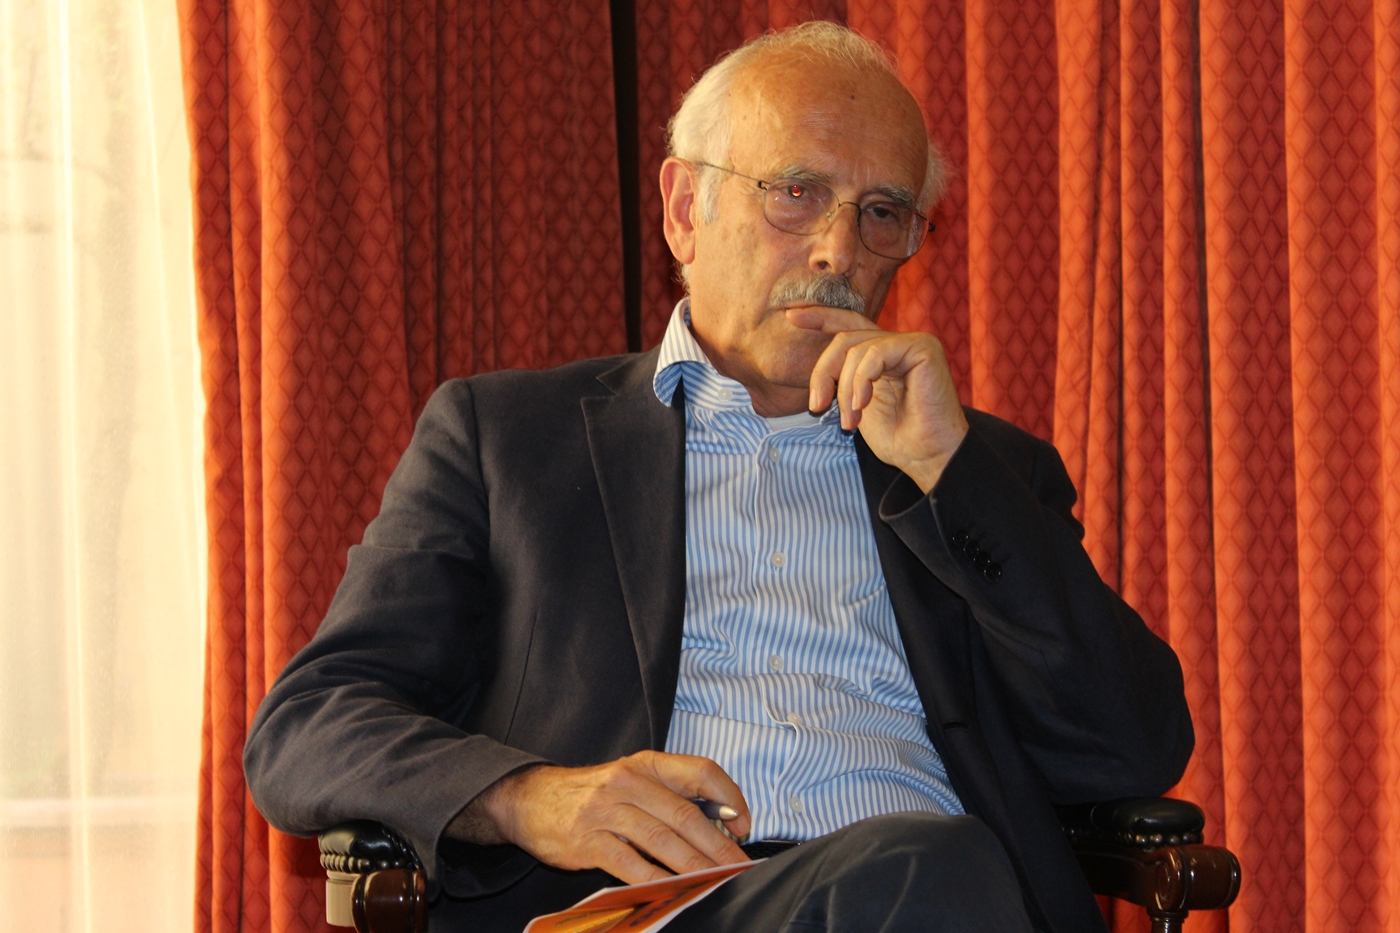 Carlo Dell’Aringa